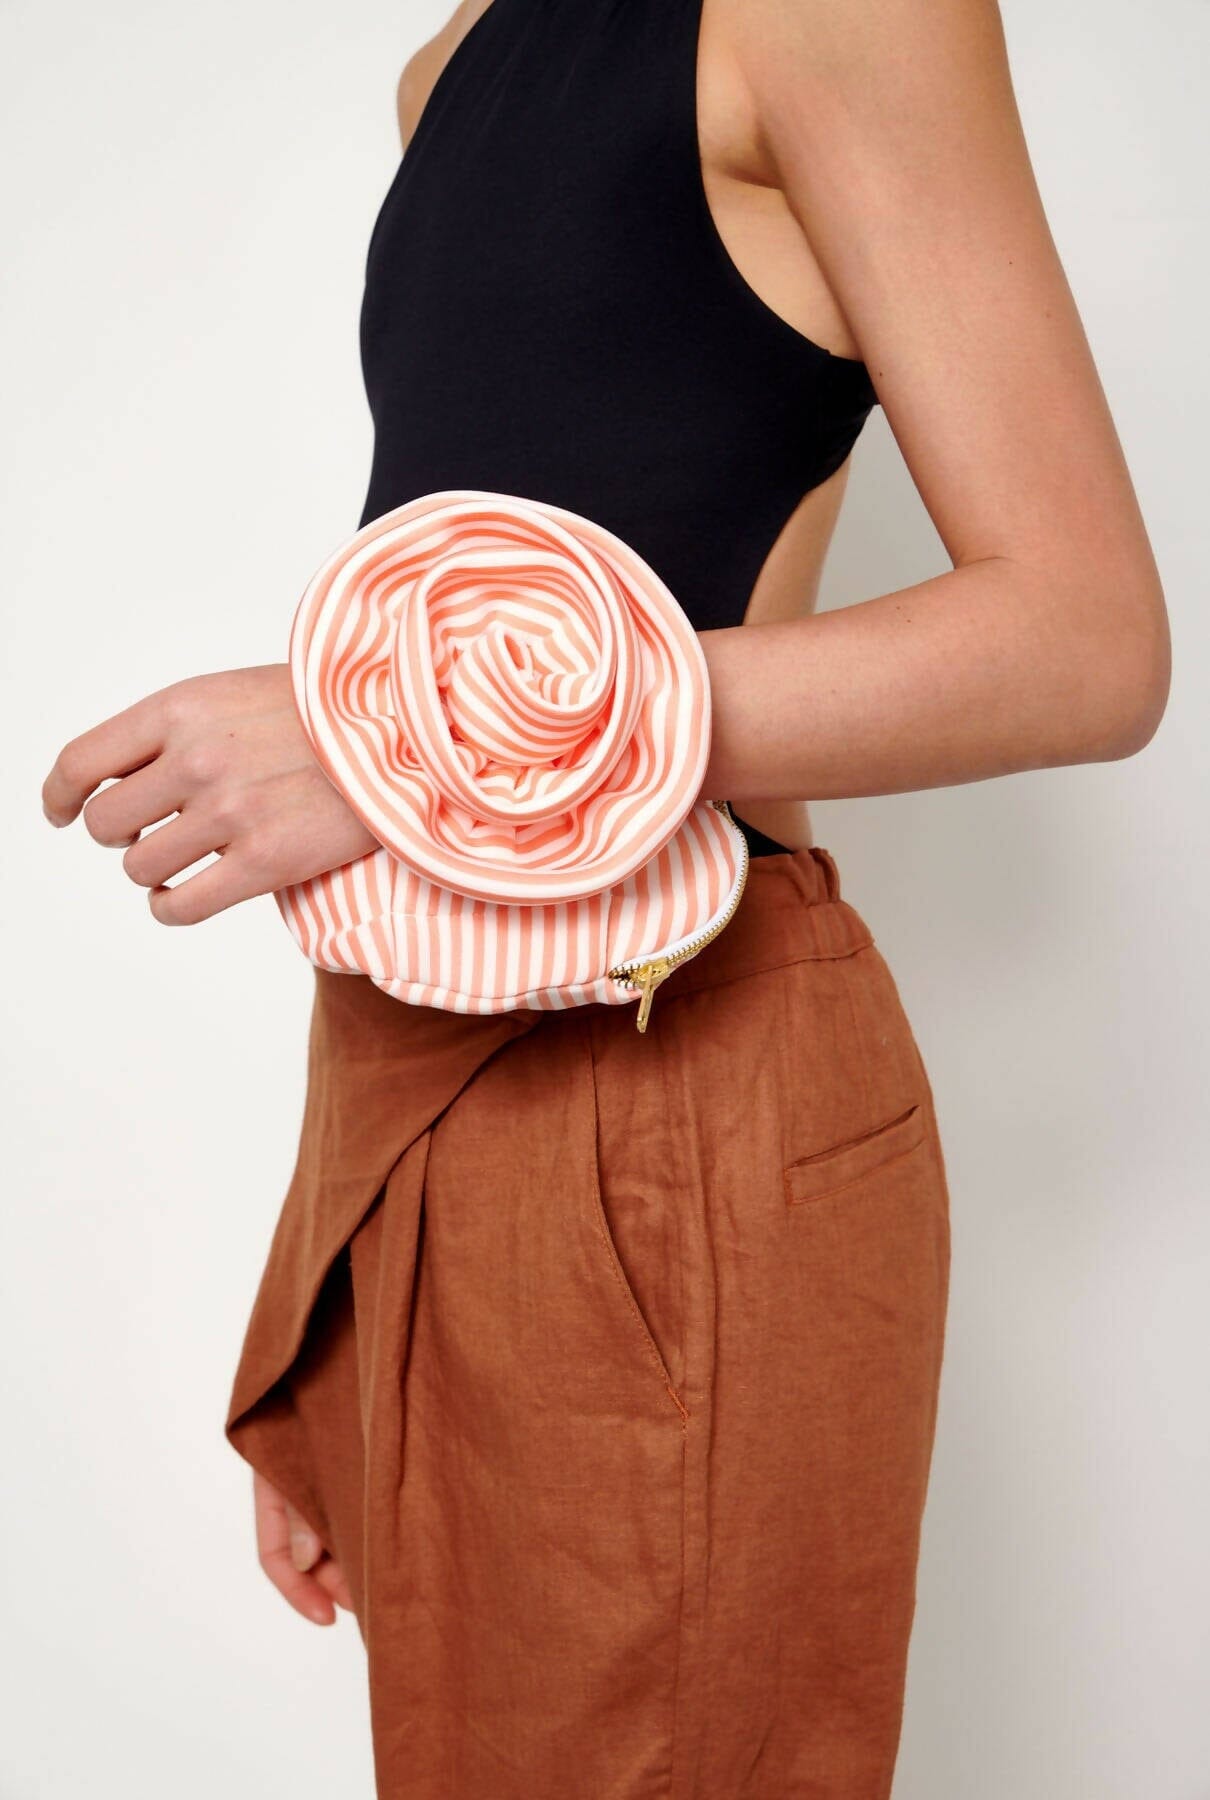 Pulseta neoprene stripes peach Hand bags Celina Martin 